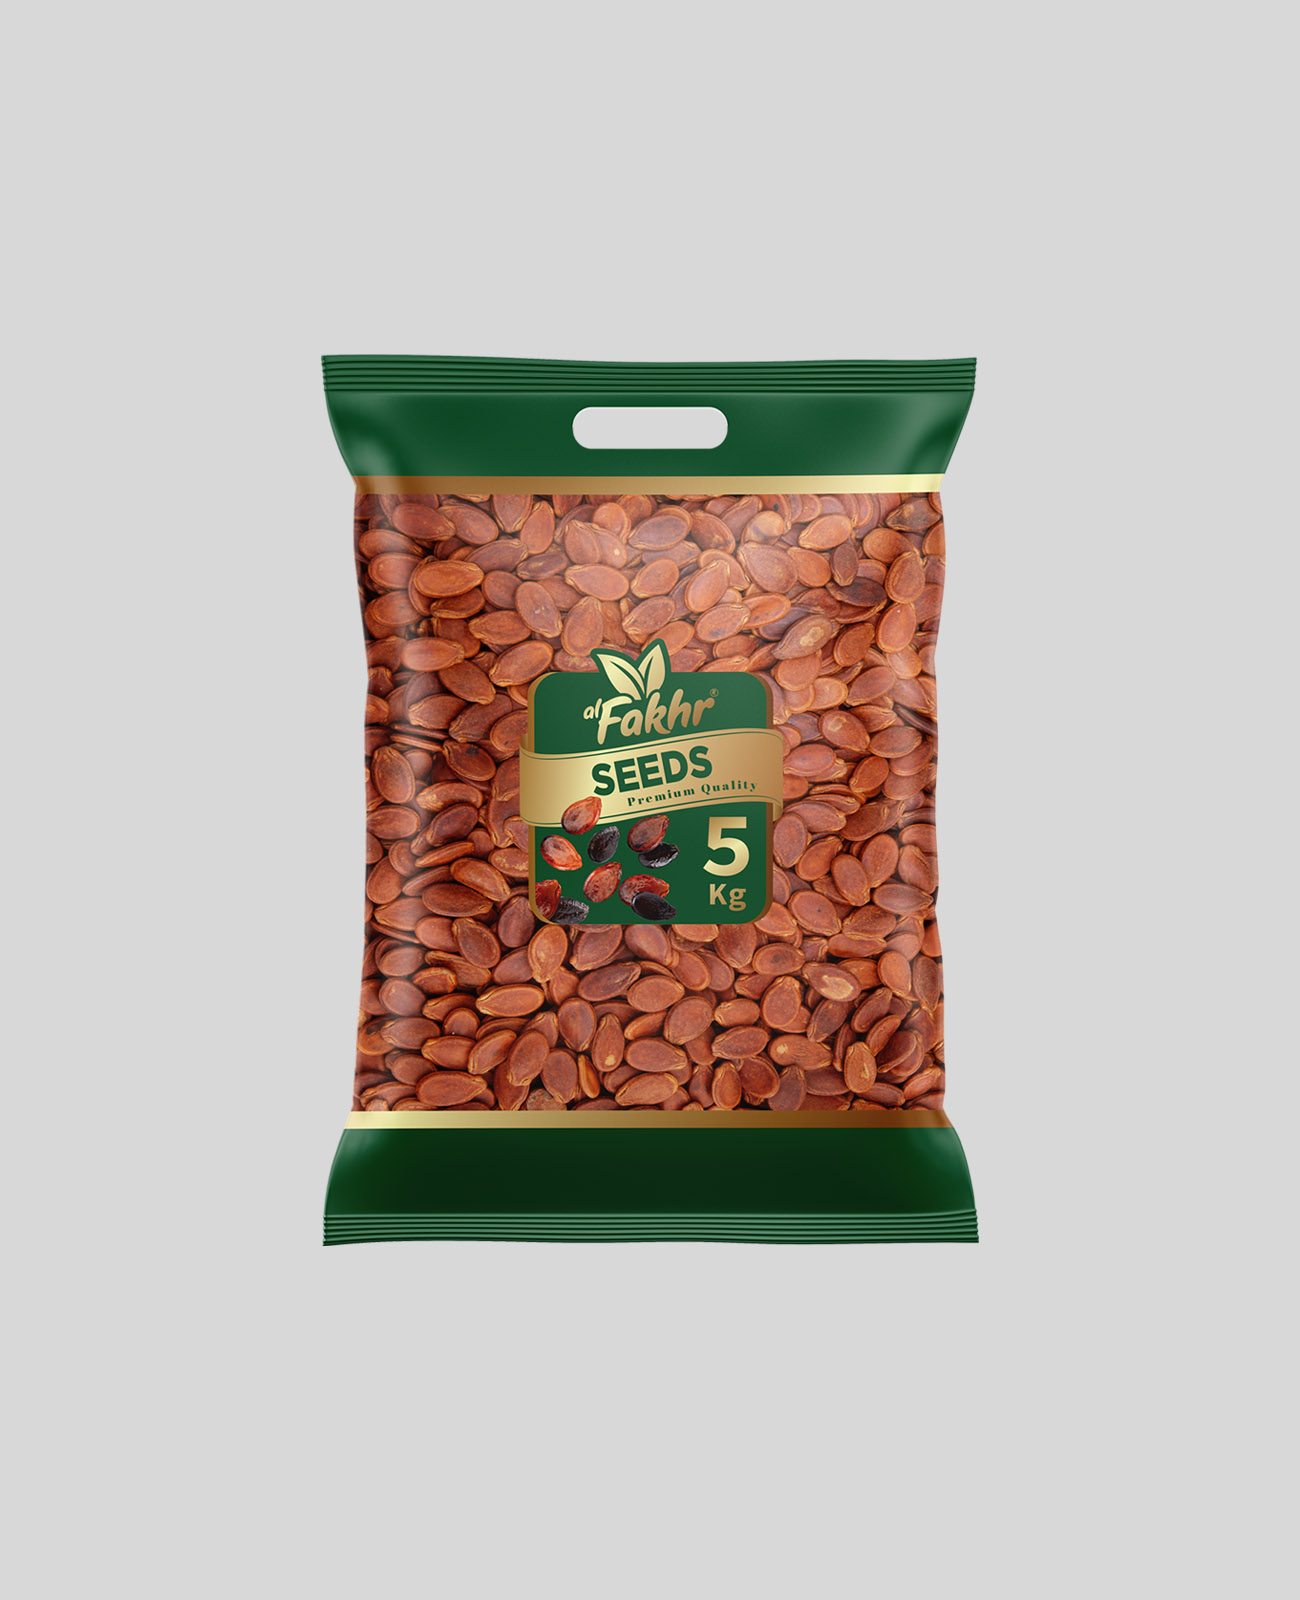 Alfakhr Premium Iranian Seeds